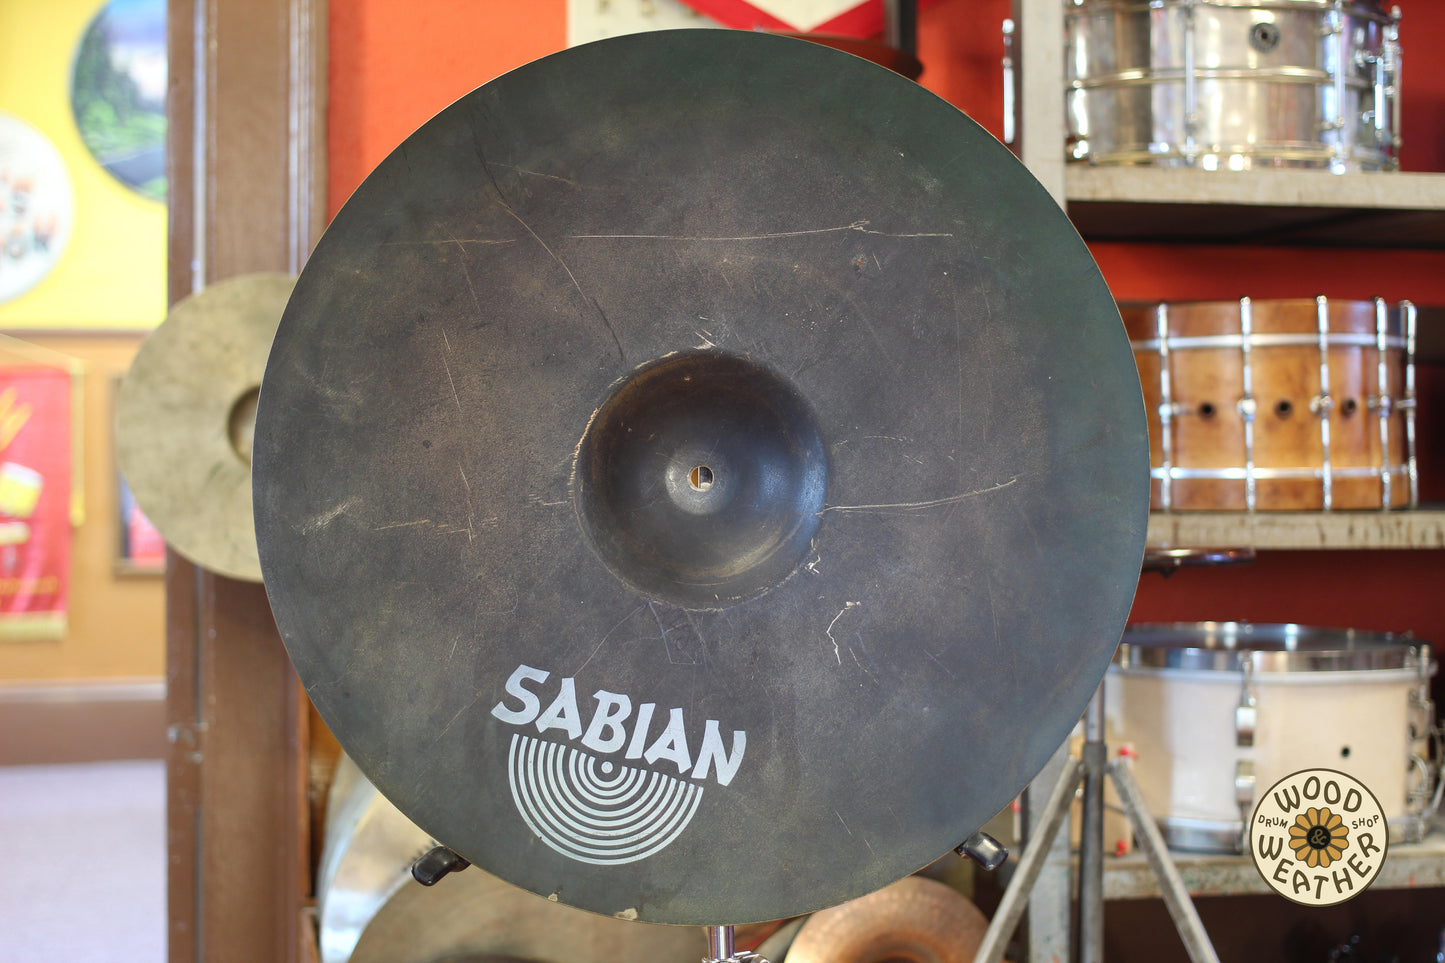 Sabian Jack DeJohnette 20" Signature Ride Cymbal 2482g